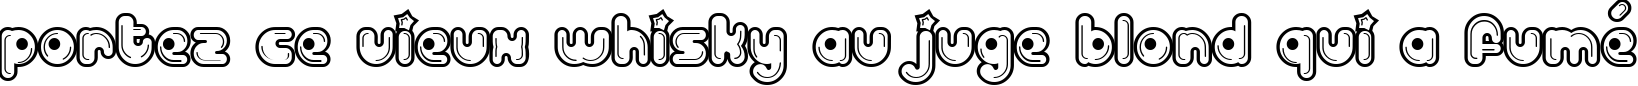 Пример написания шрифтом Billo Dream текста на французском